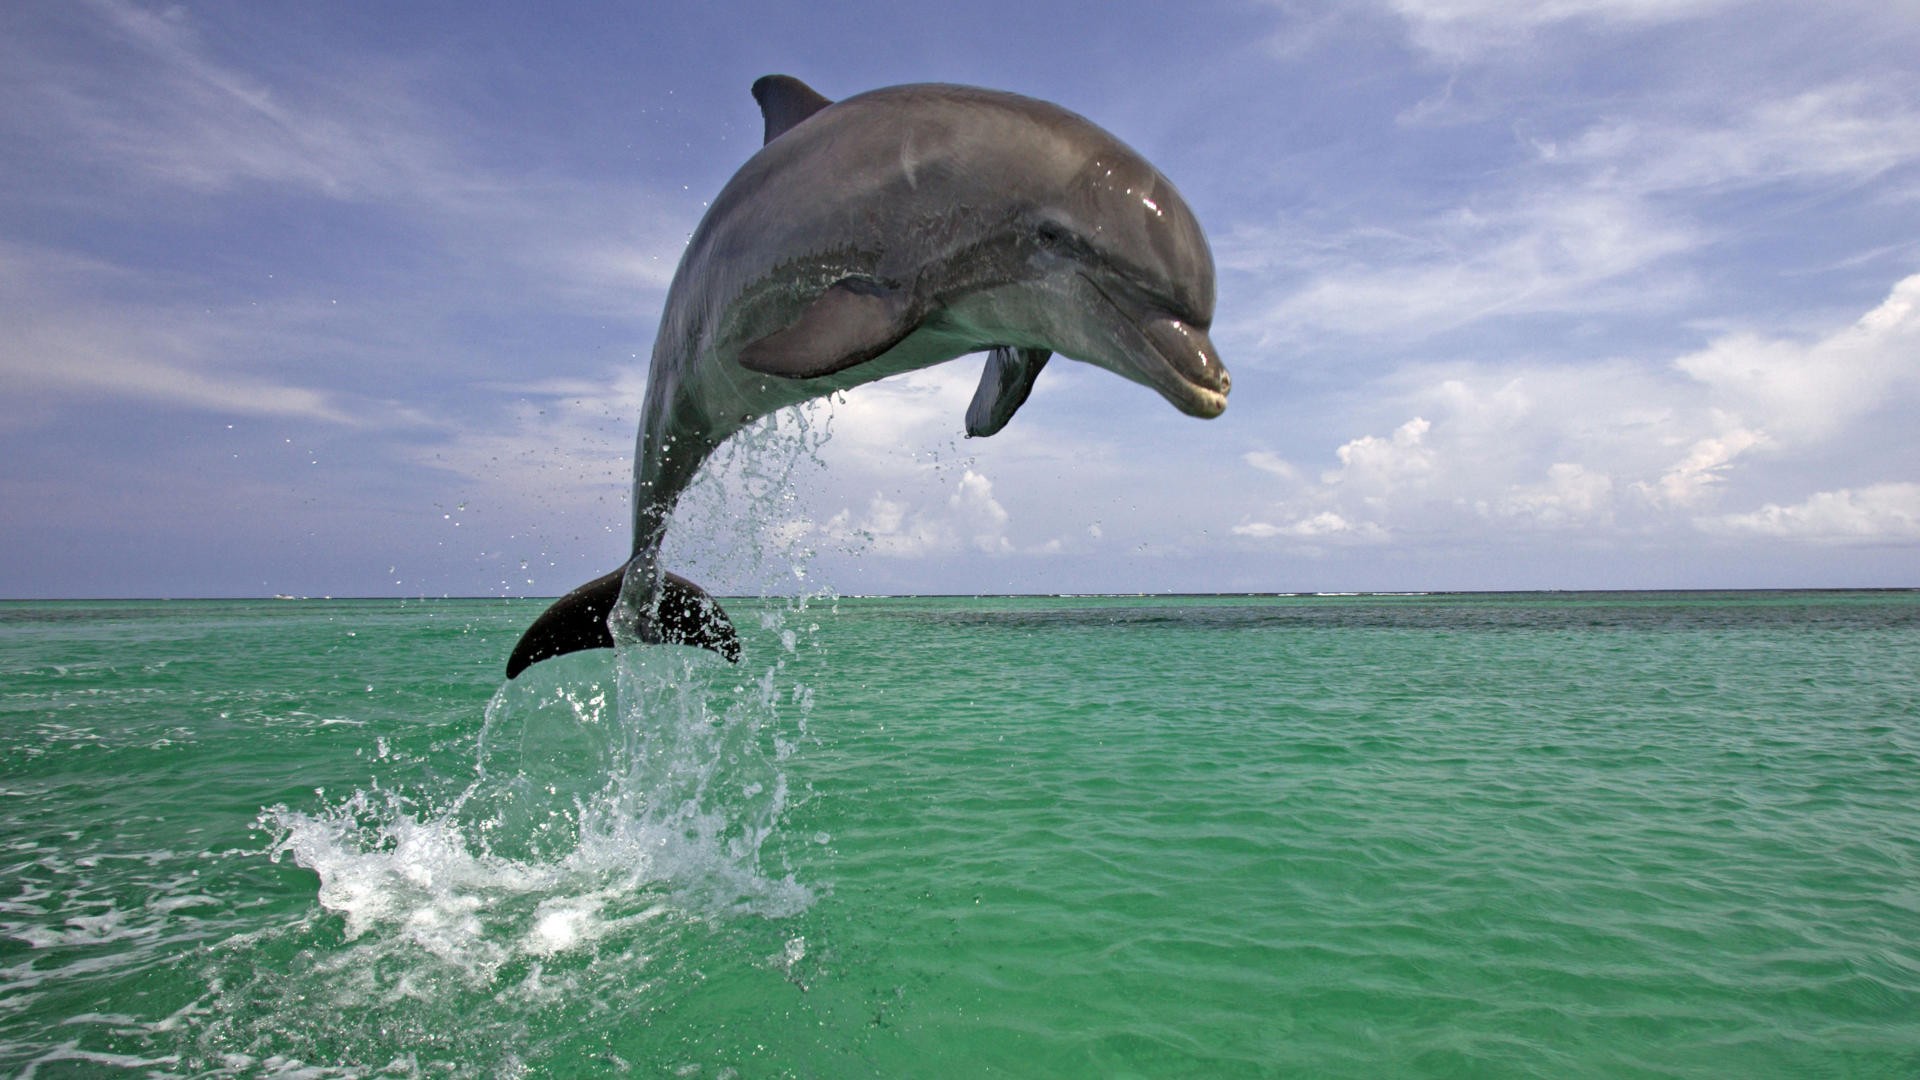 Iru ẹja dolphin